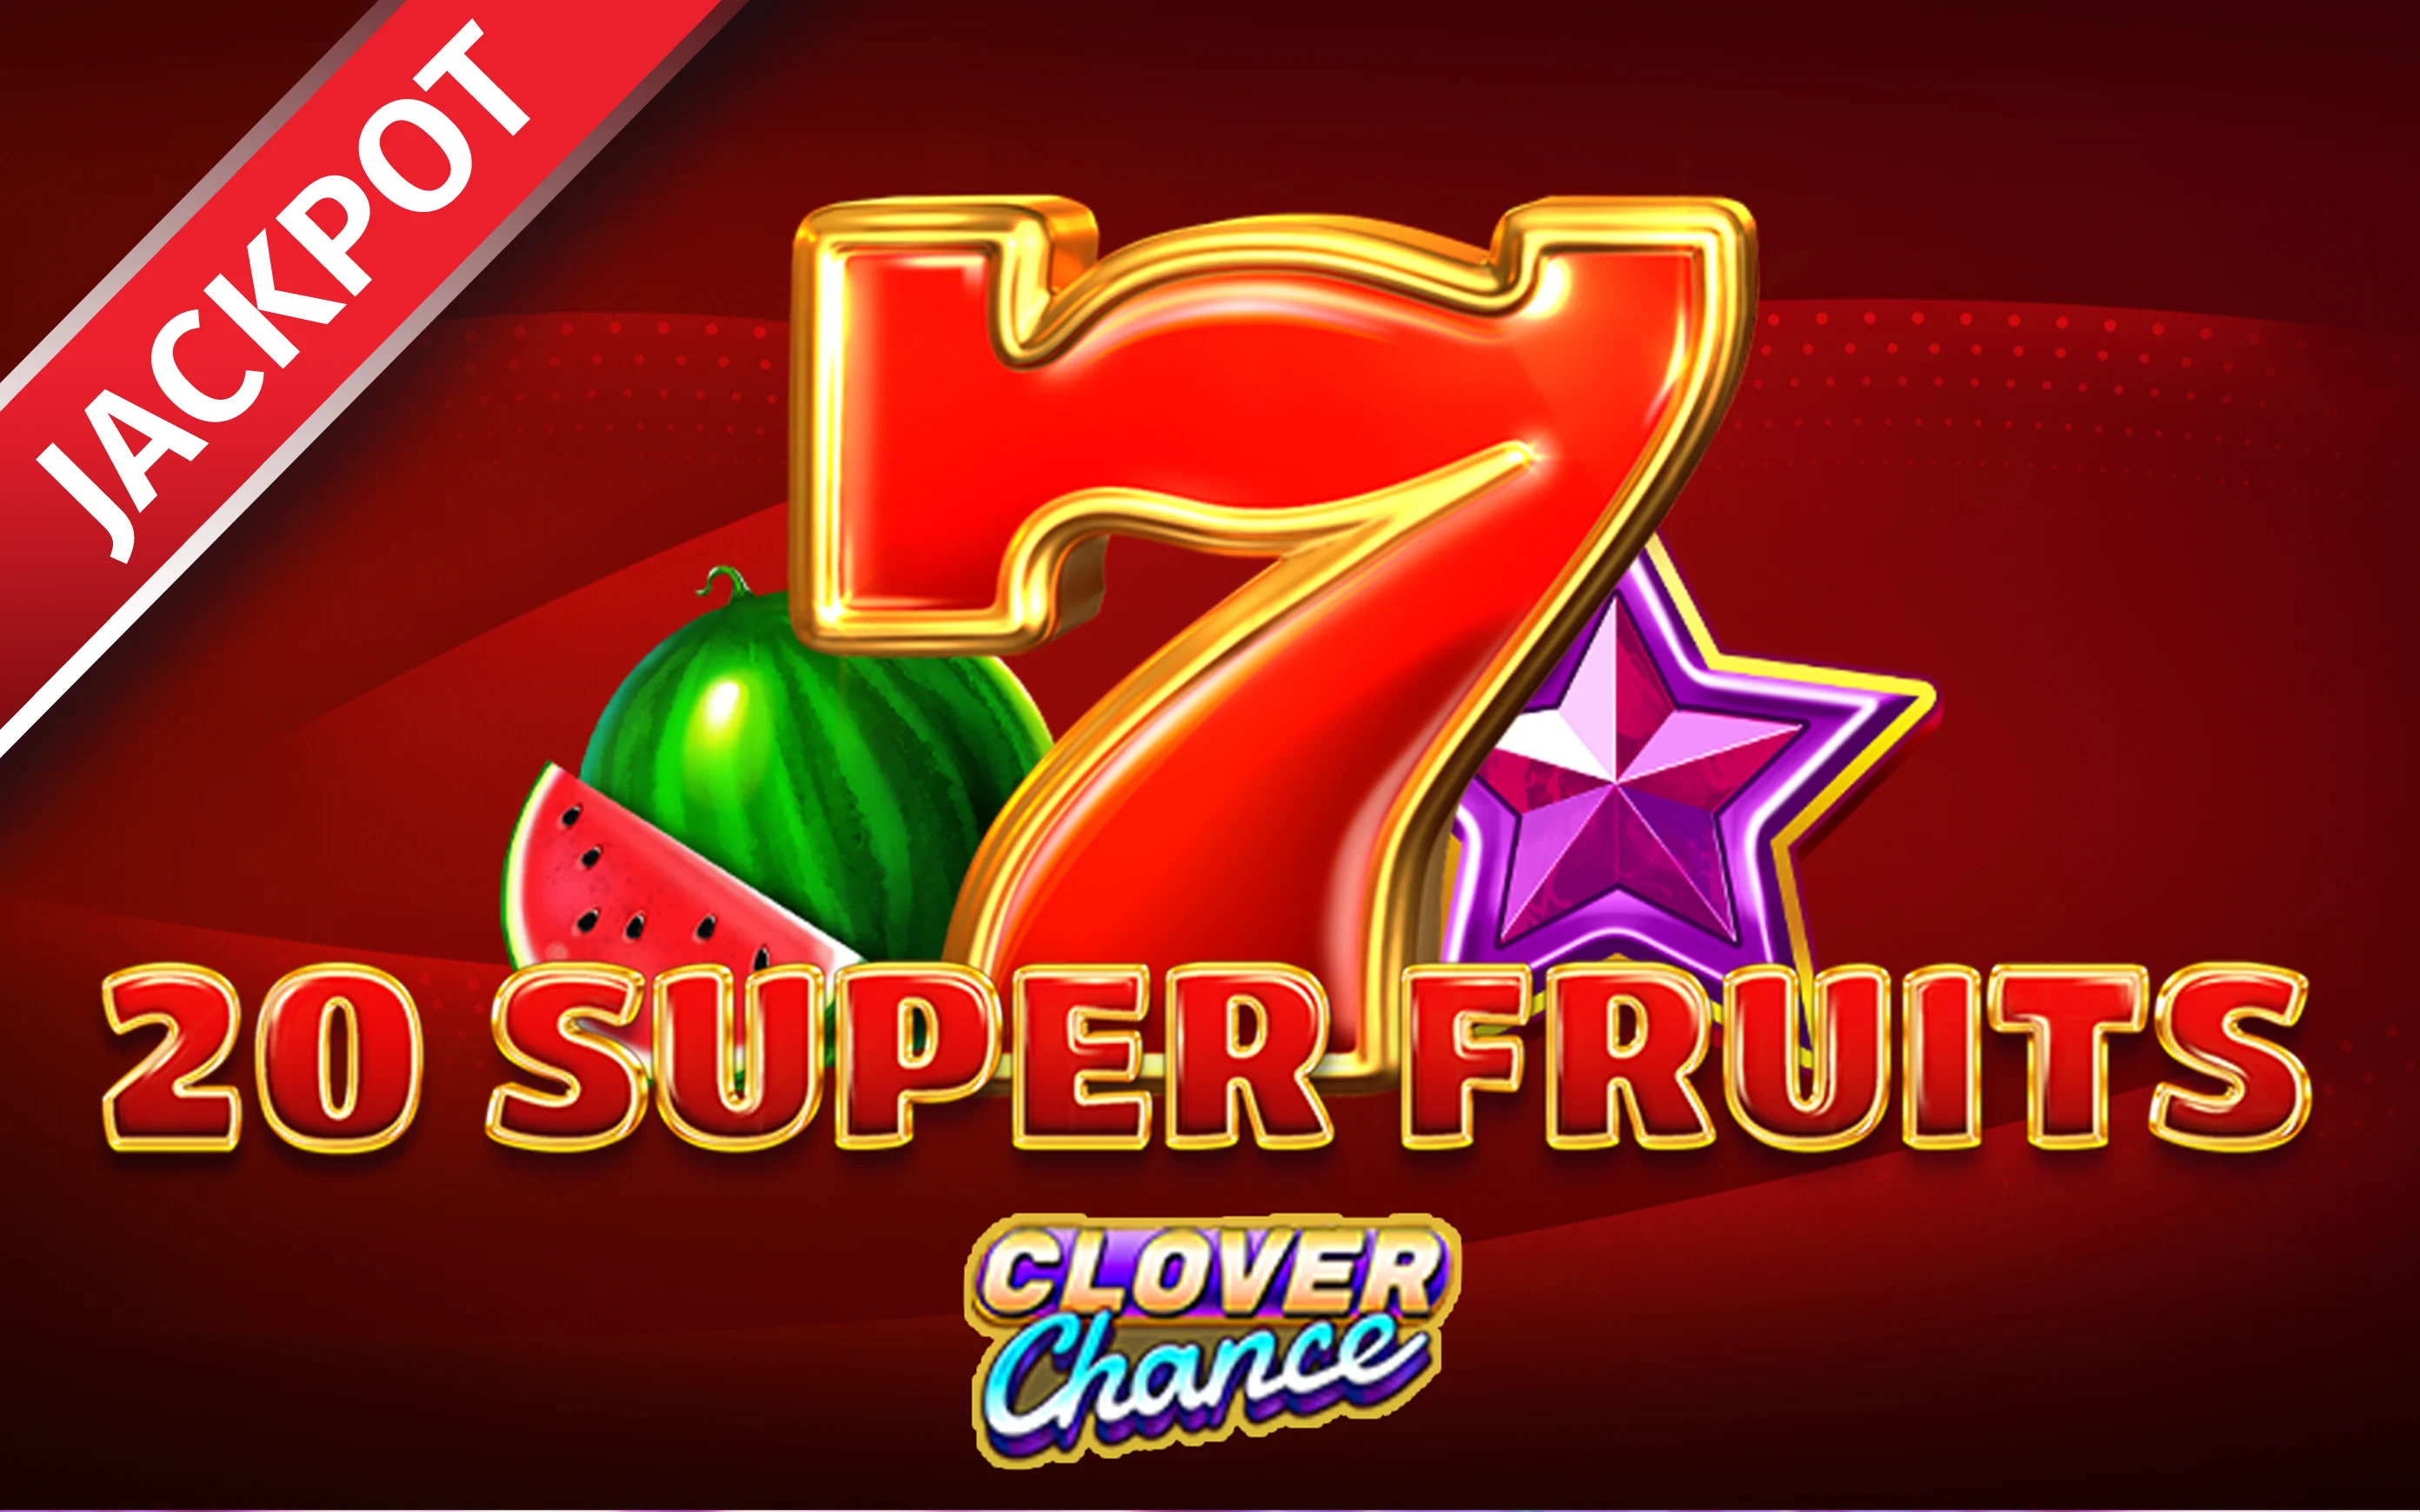 Gioca a 20 Super Fruits Clover Chance sul casino online Starcasino.be